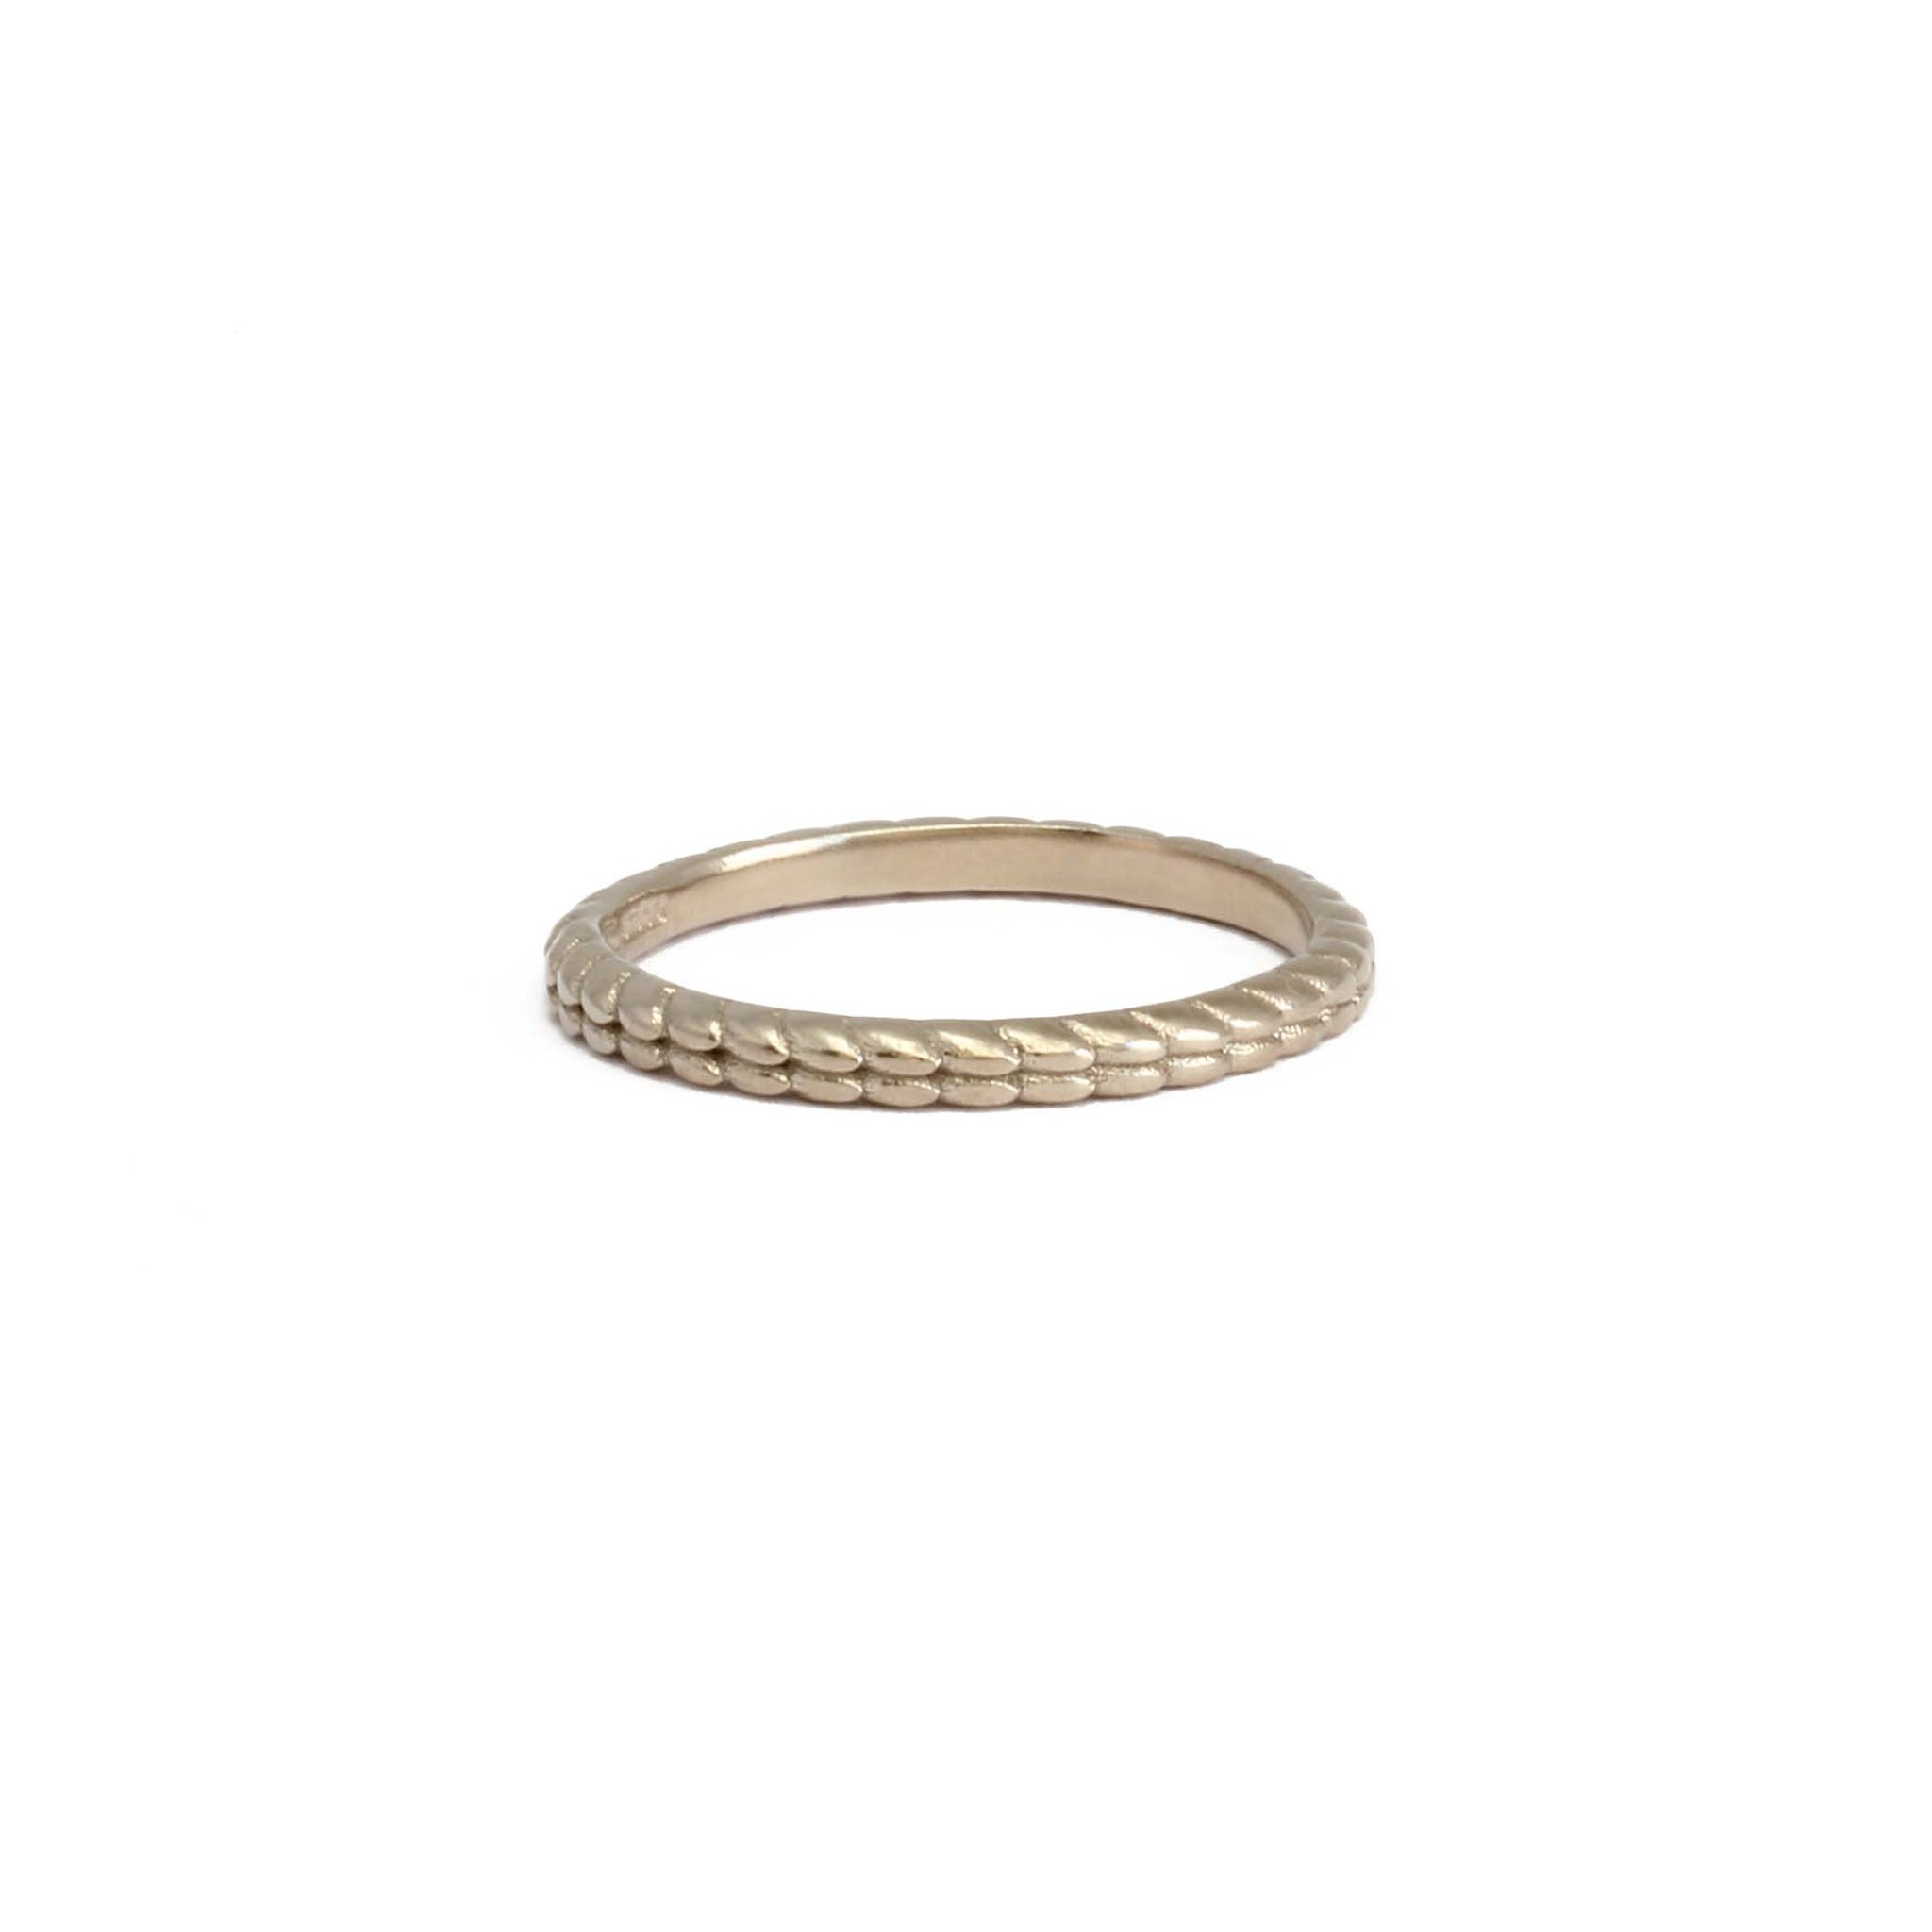 2mm thick Tagmata 18ct white gold Knot Ring